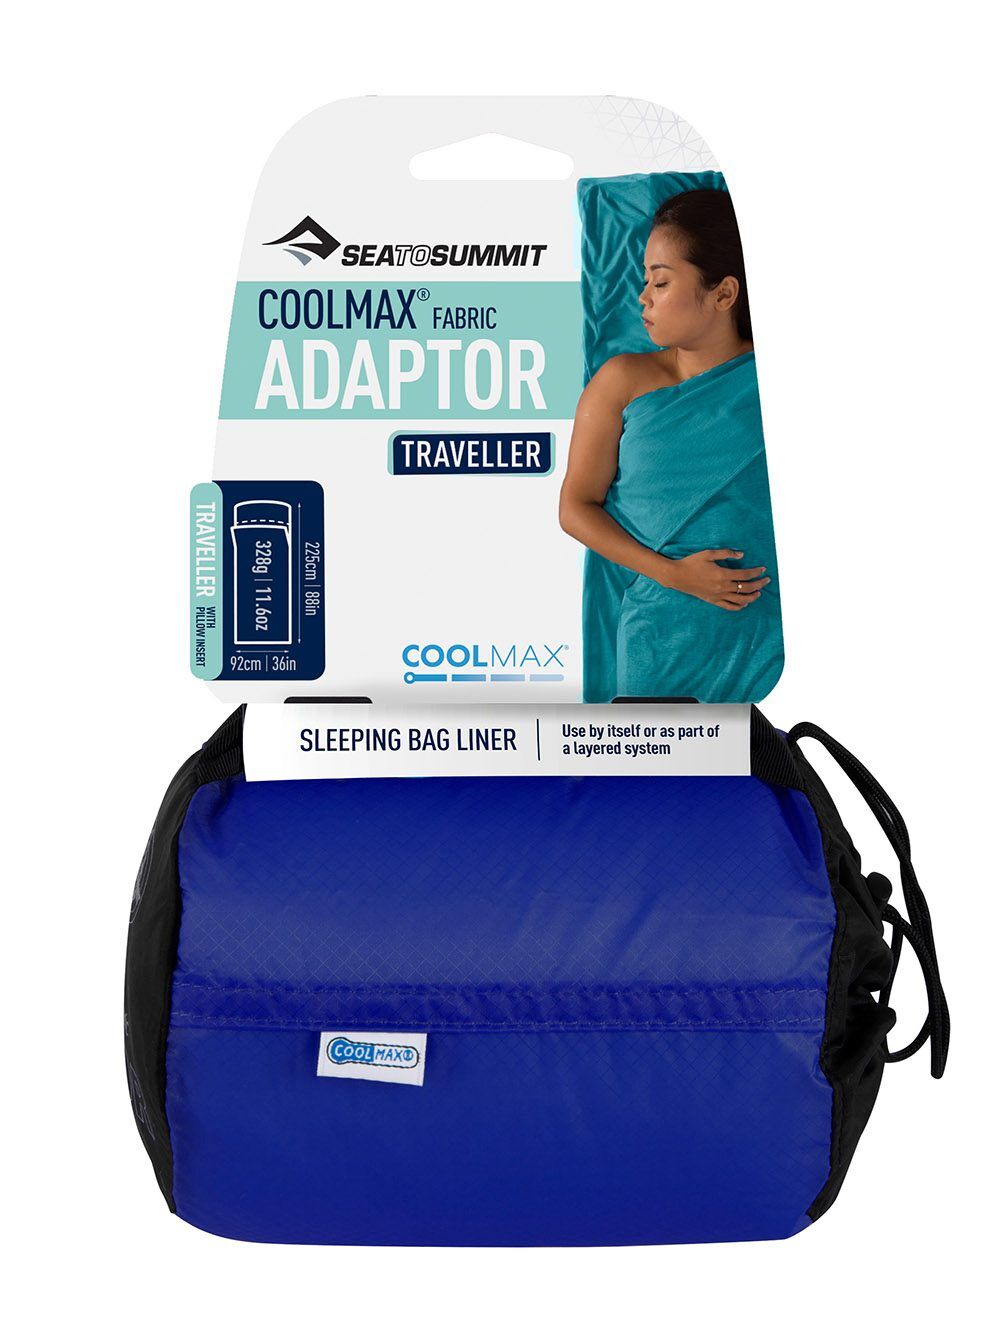 Sea To Summit - Coolmax Adaptor Traveller - Sleeping Bag Liner